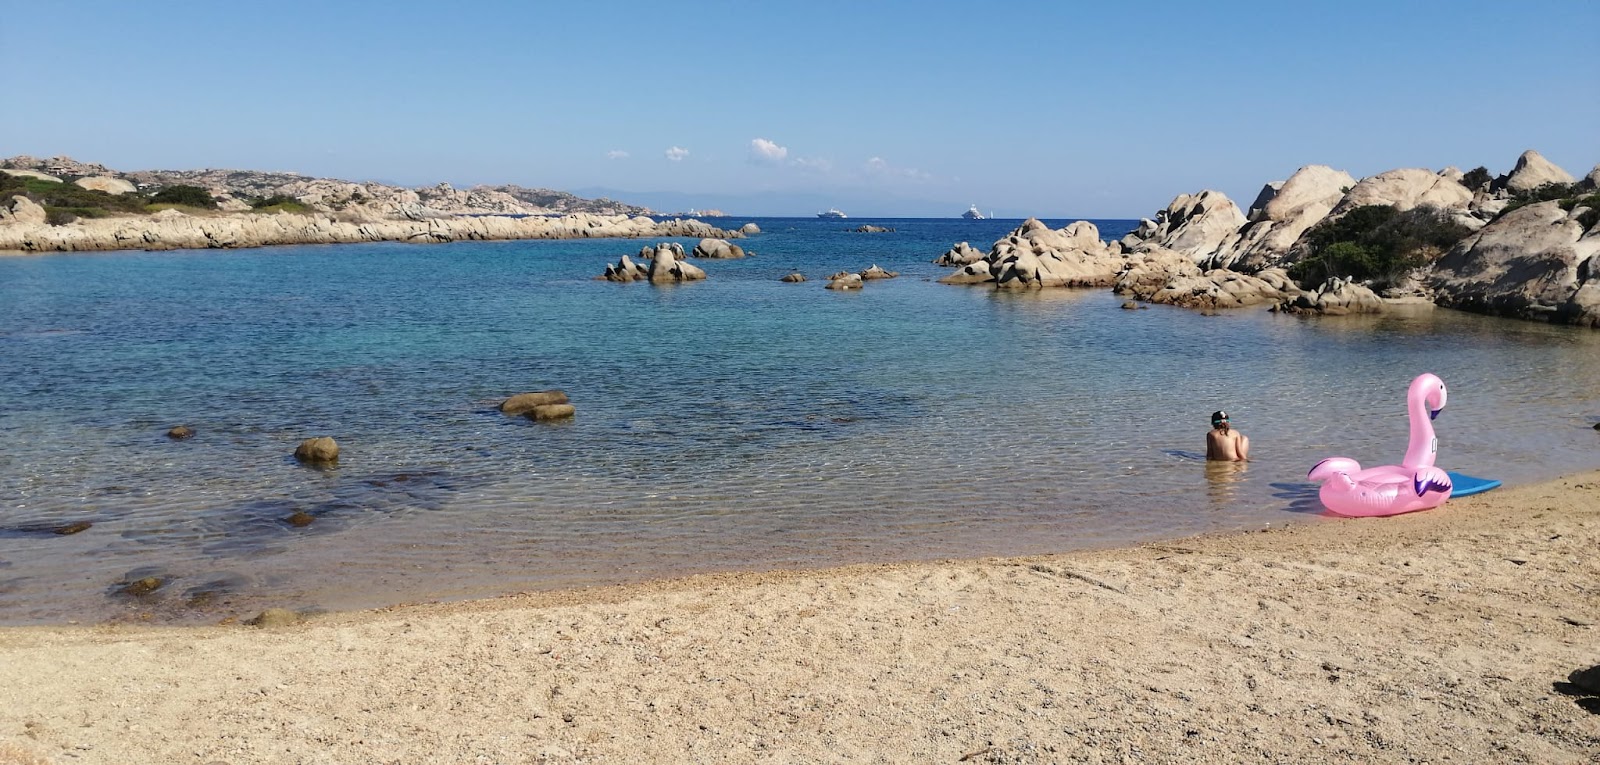 Foto van Spiaggia Testa Del Polpo met kleine baai